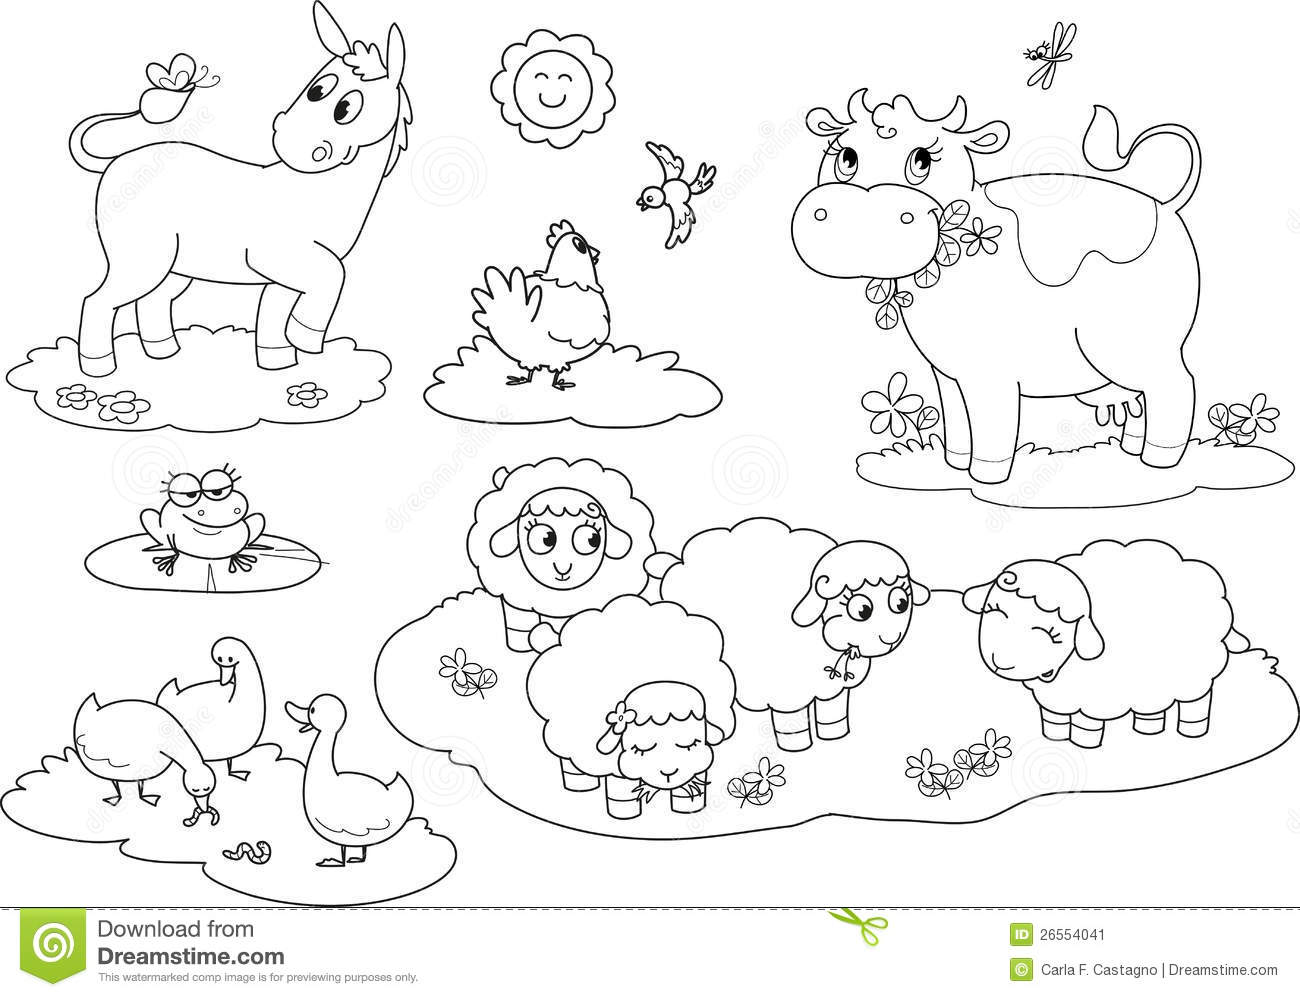 Dibujo para colorear: Animales de granja (Animales) #21428 - Dibujos para colorear y pintar